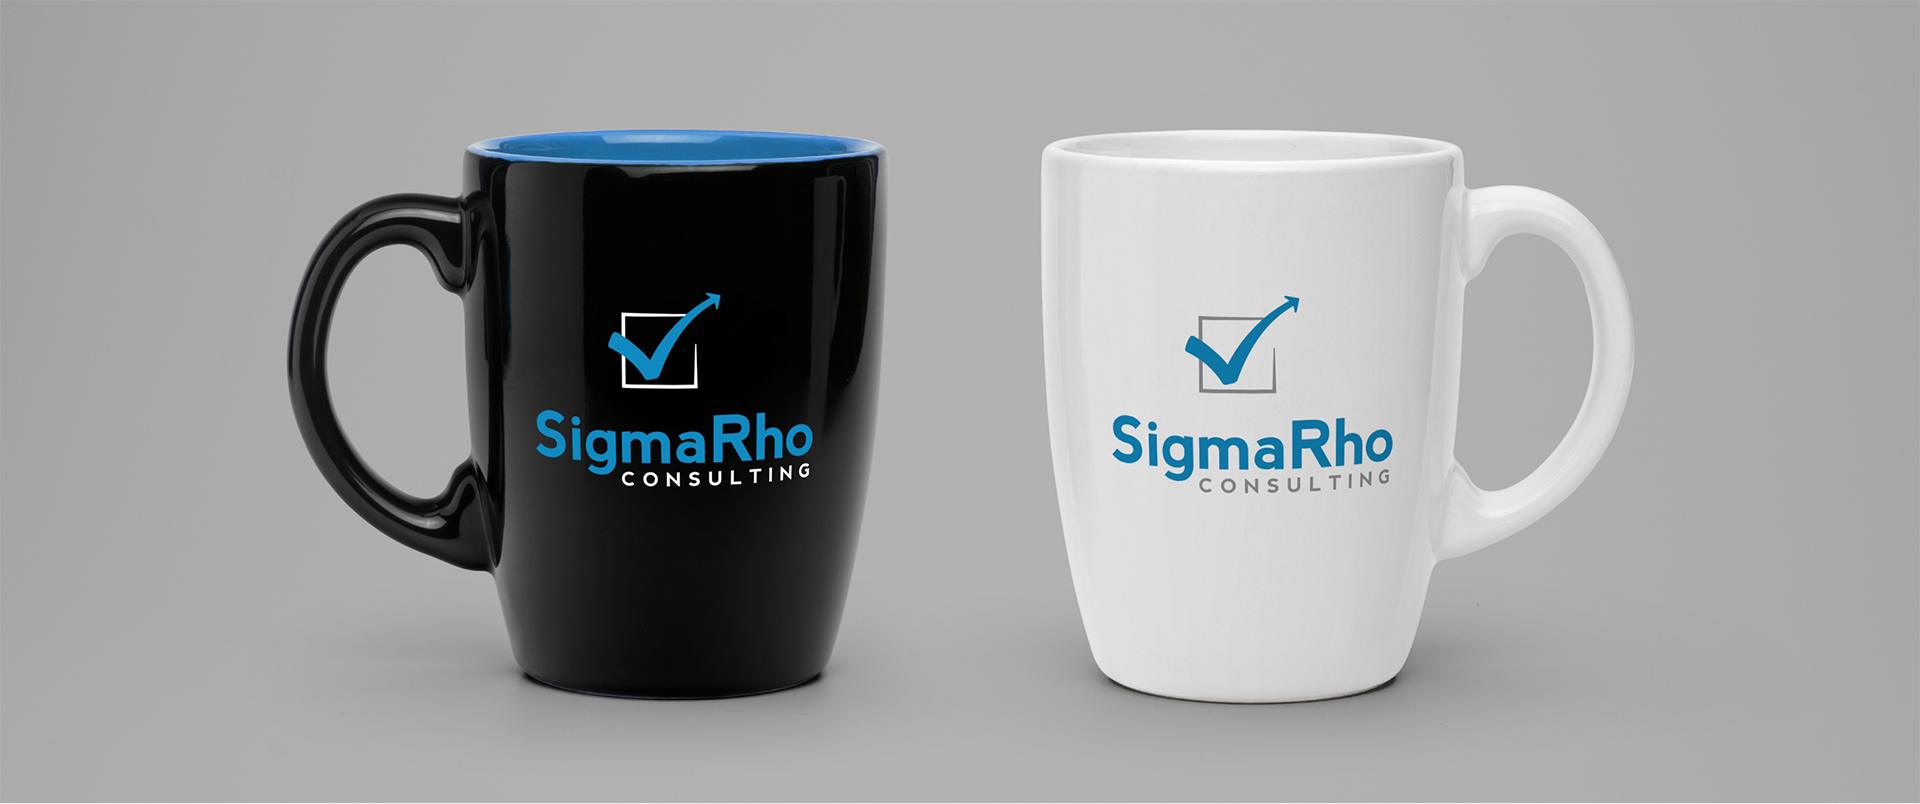 Sigma Rho logo on 2 coffee mugs